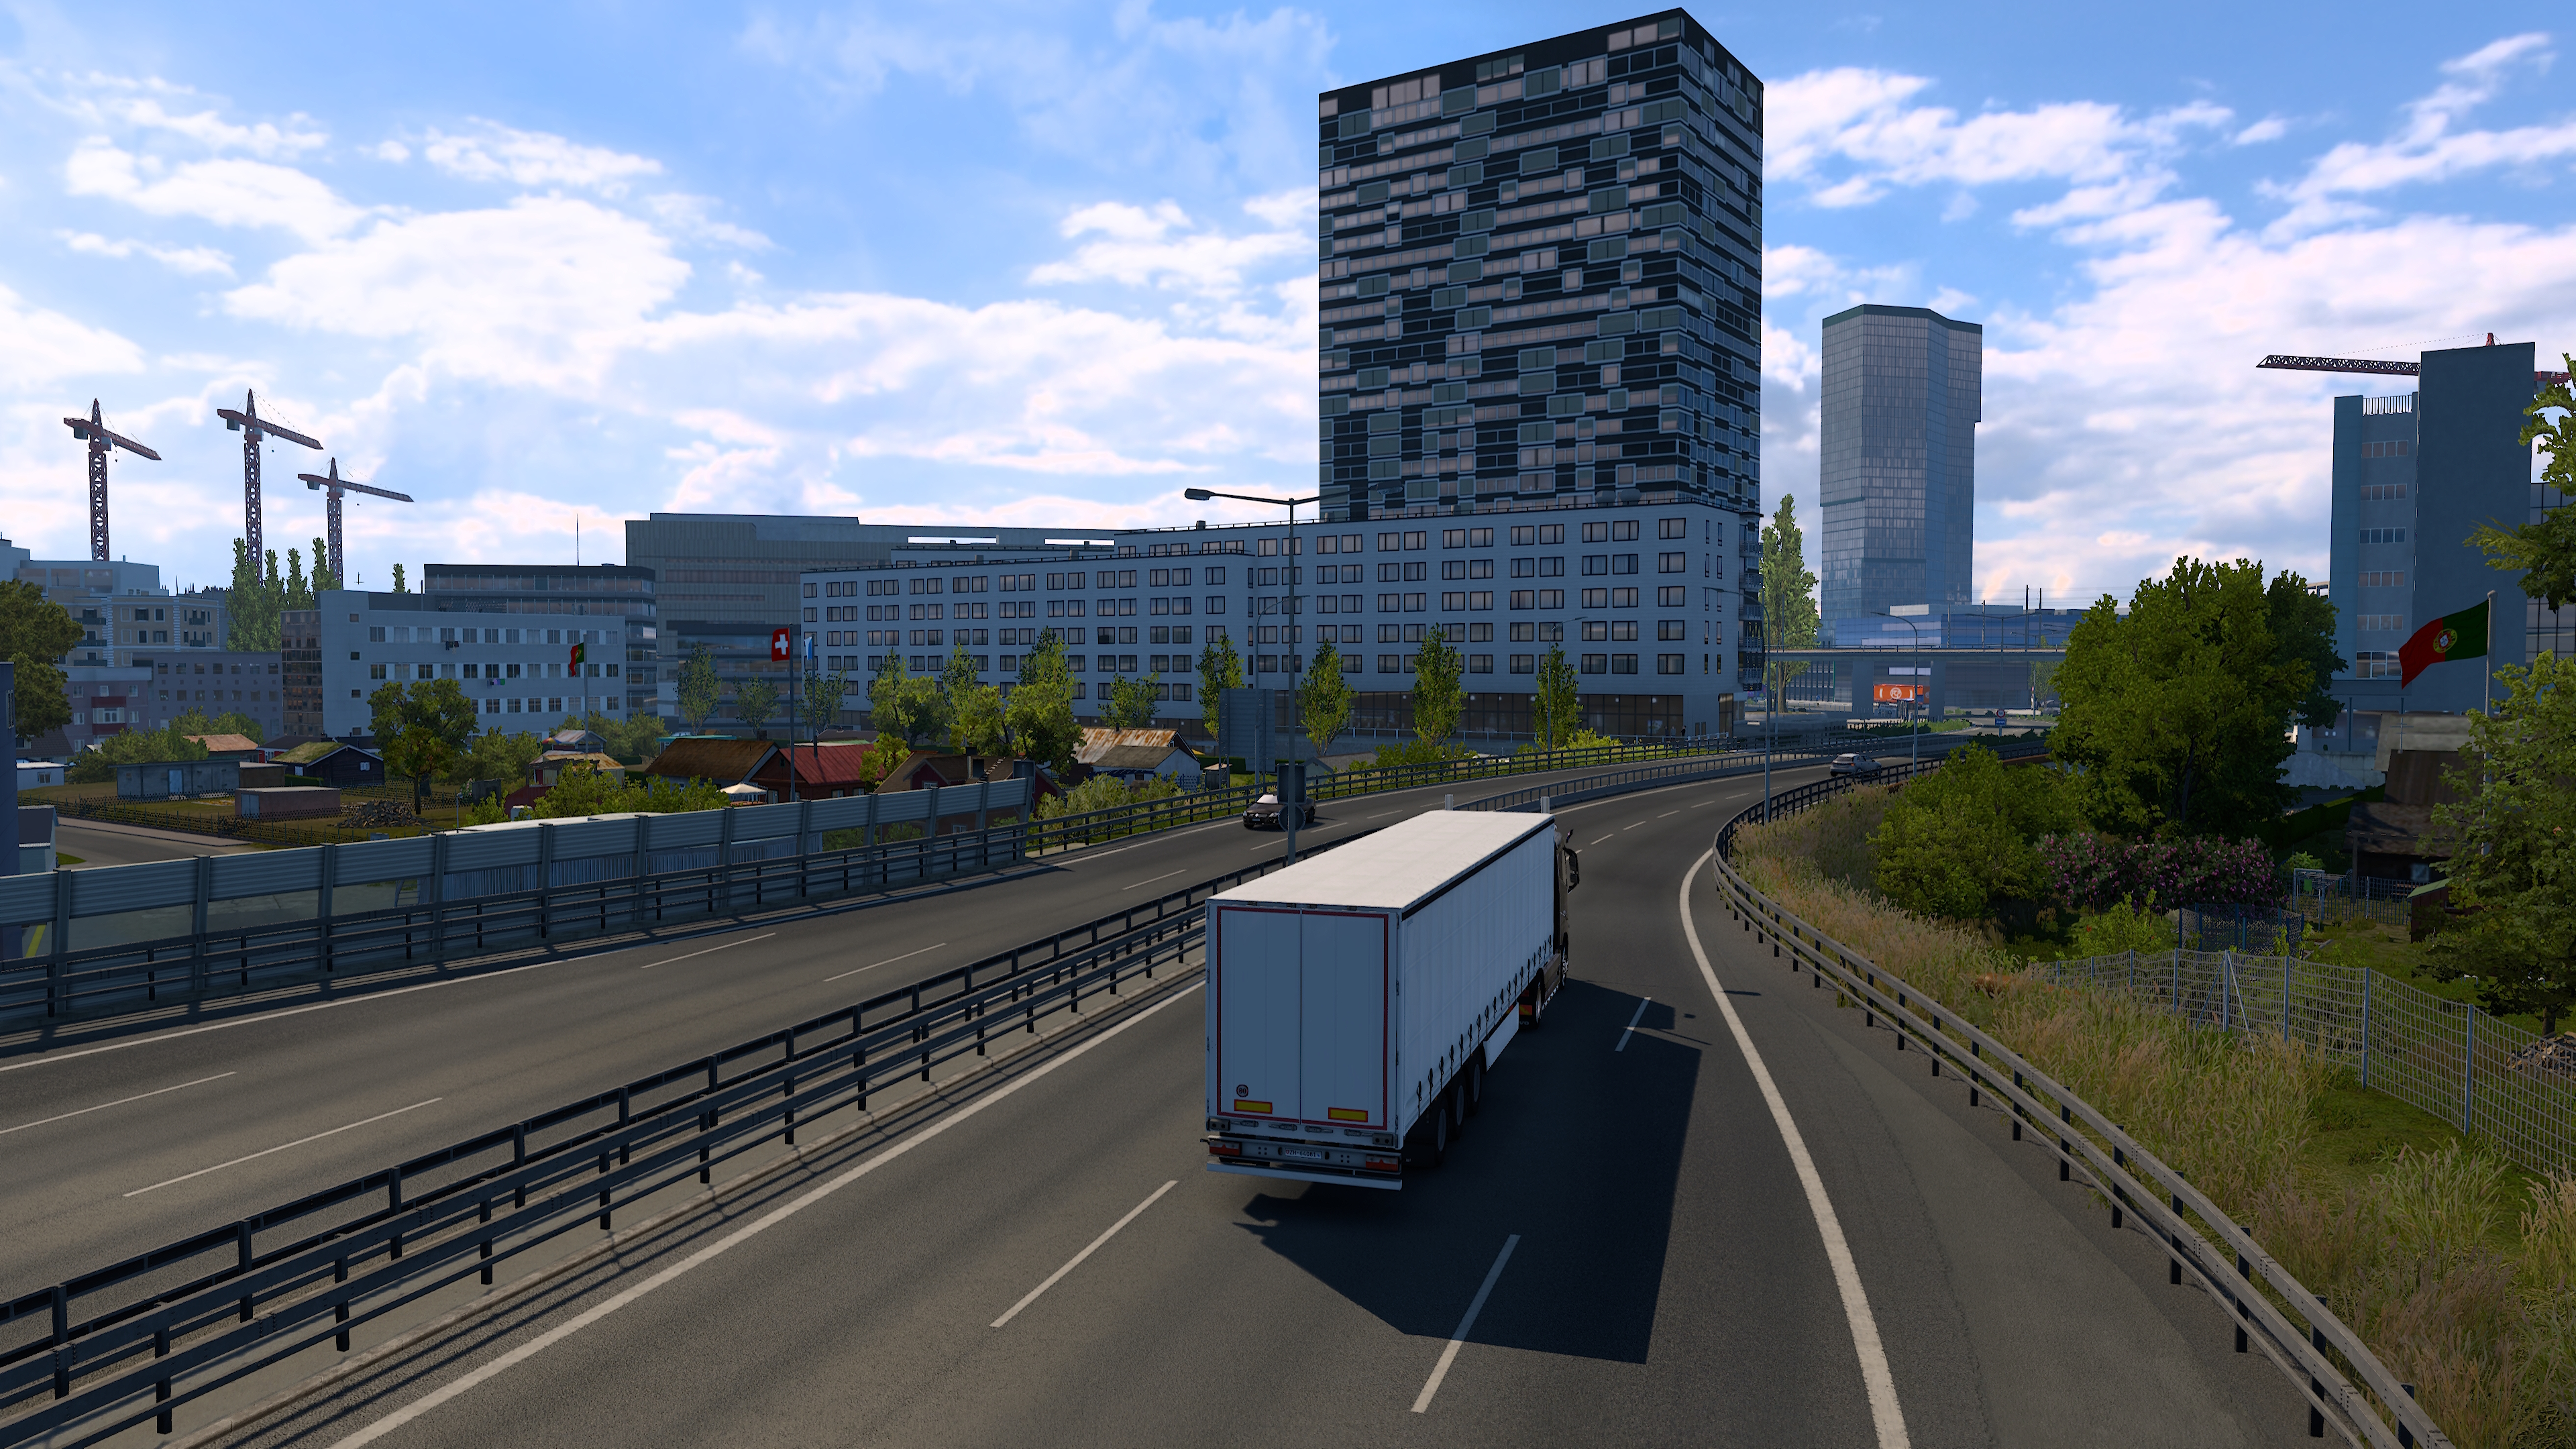 Euro Truck Simulator 2 SCS Software Volvo Truck CGi Sky Clouds Vehicle Road Switzerland Digital Art  3840x2160